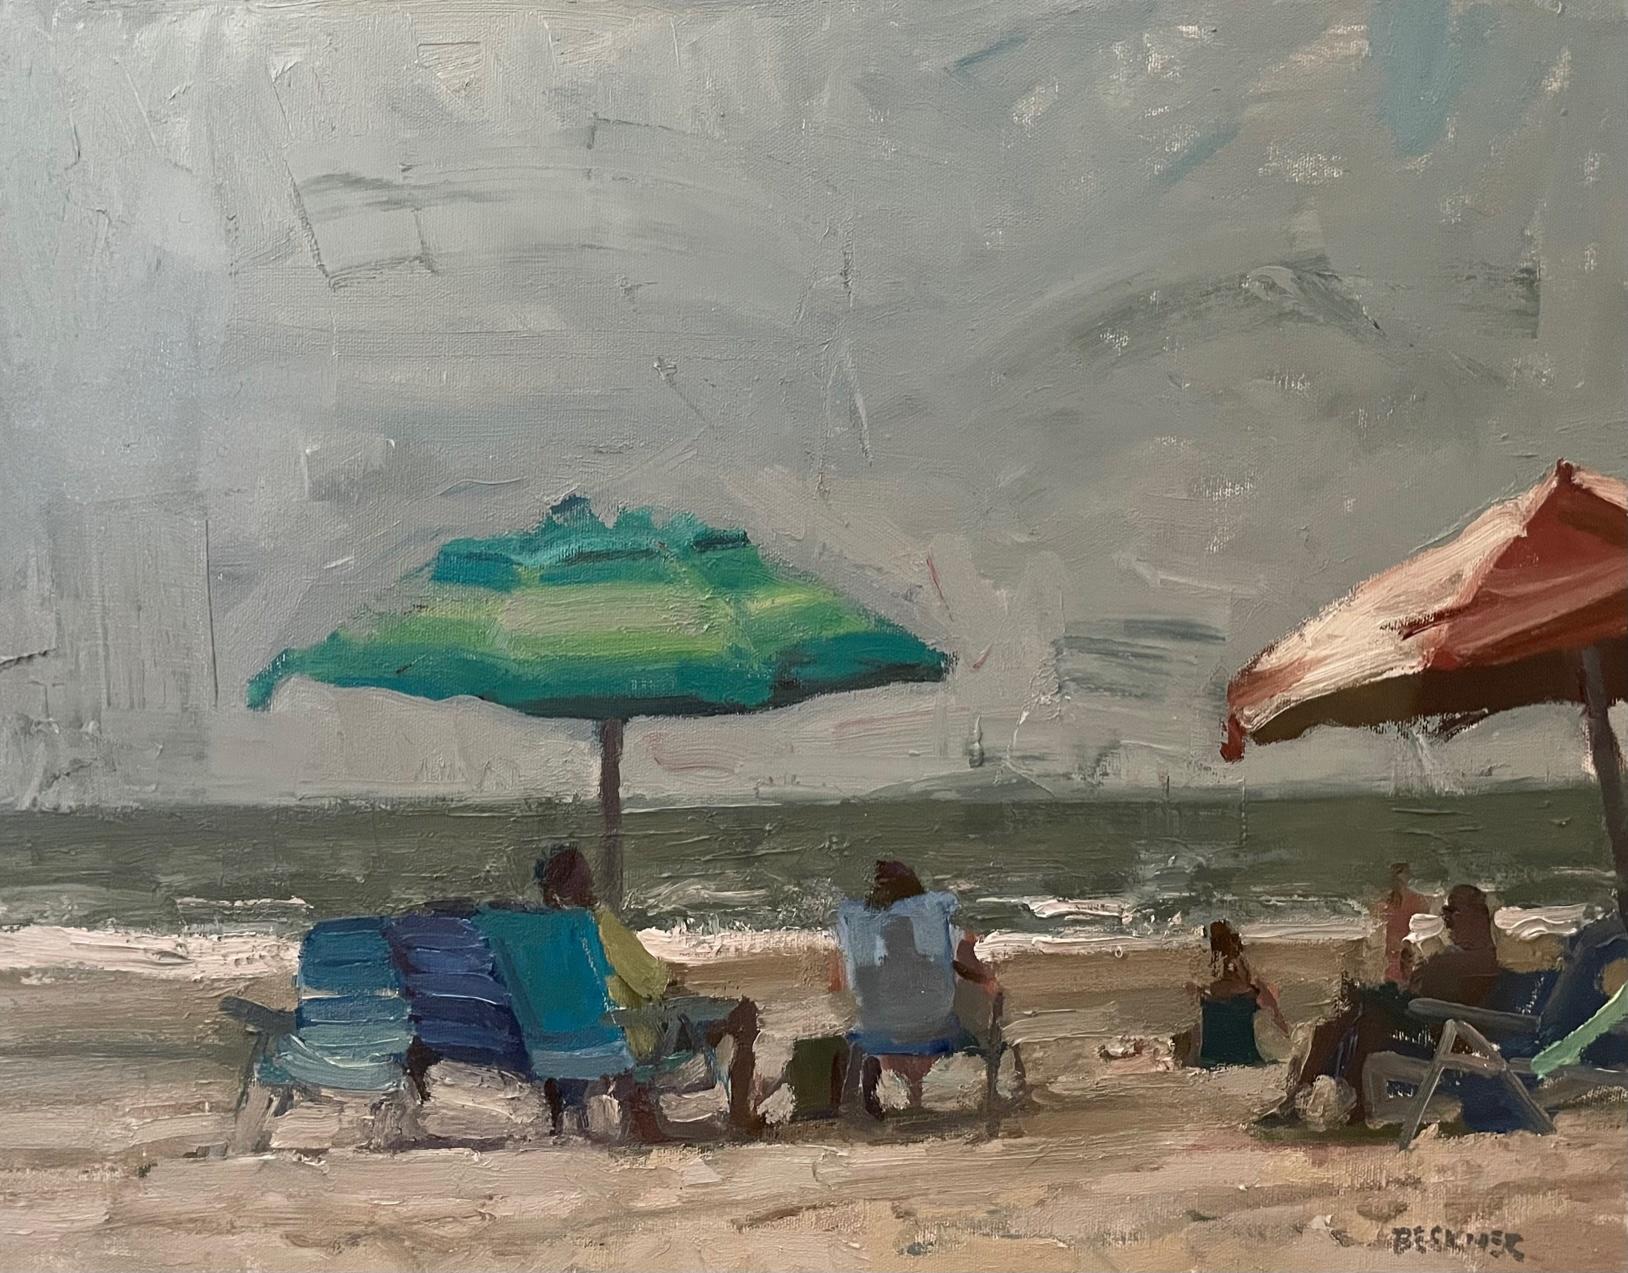 Jim Beckner Figurative Painting - DANA BEACH IN GRAYS Oil on Panel,  Impressionism 18x24,  CA Beaches Figurative